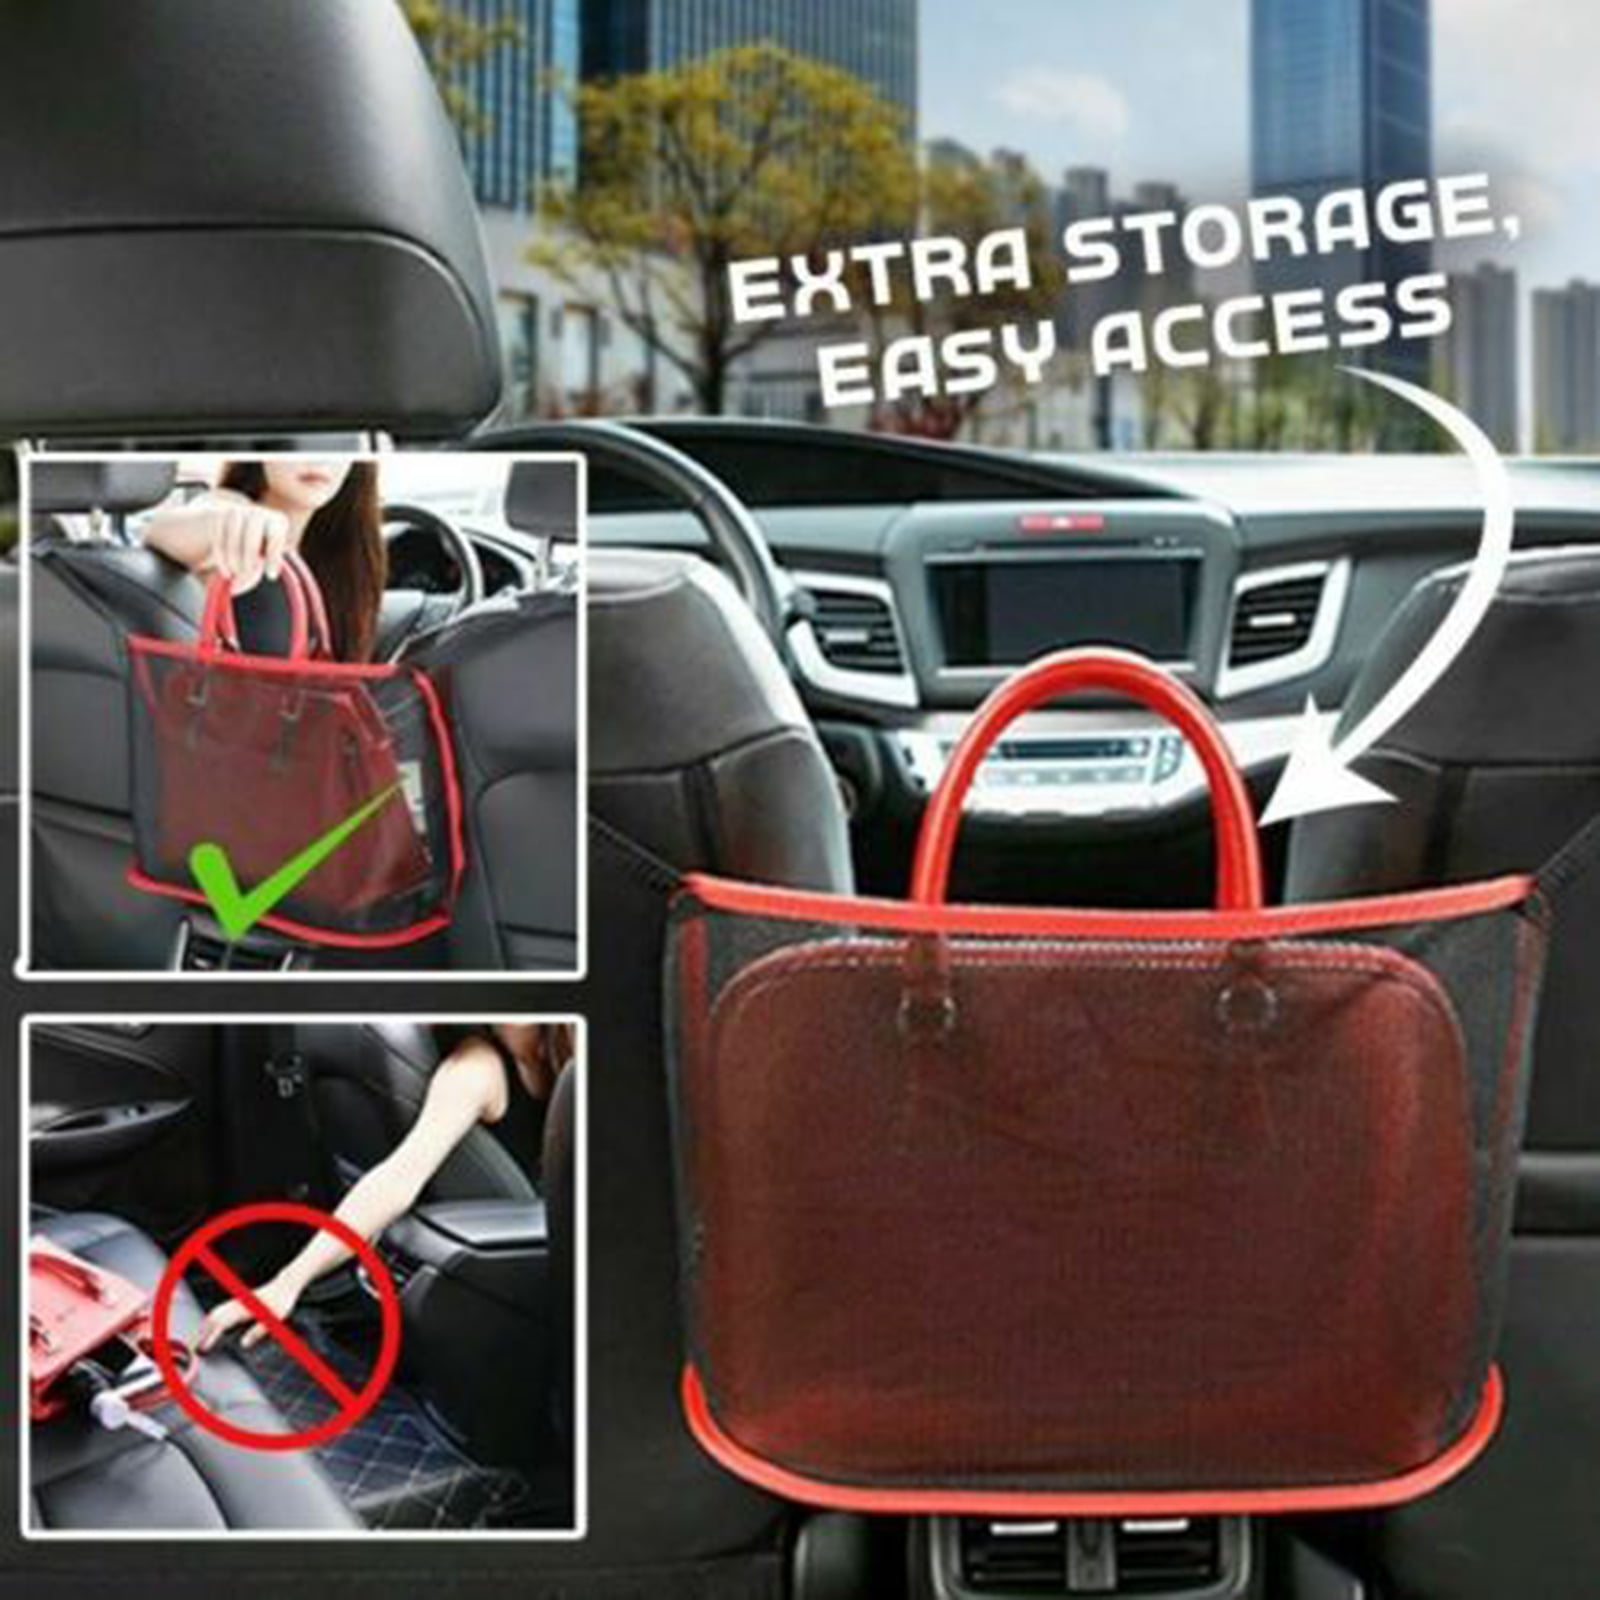 Advanced Car Seat Side Storage Mesh Net Bag Net Pocket Handbag Holder Organizer